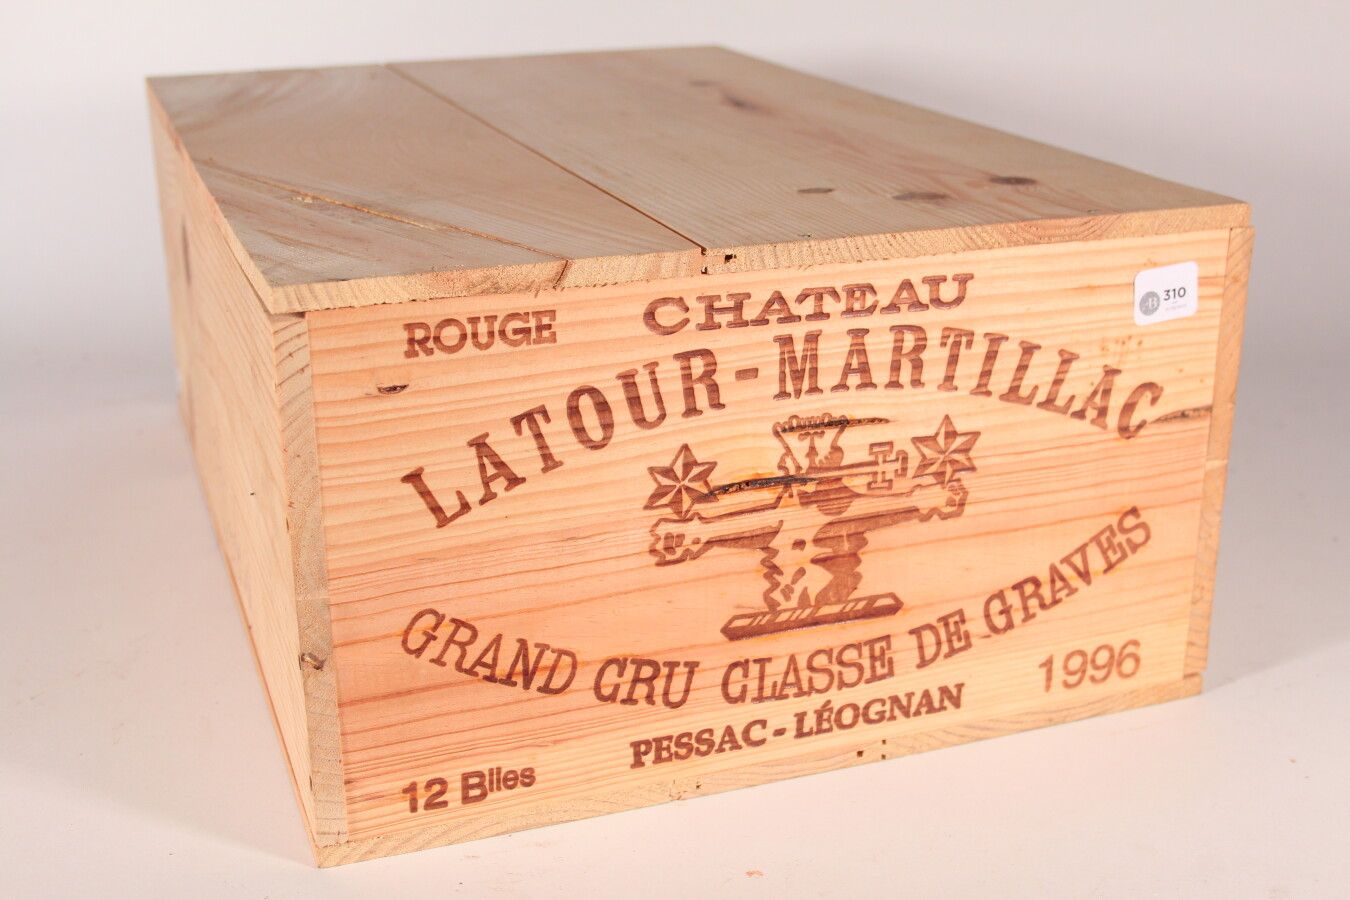 Null 1996 - Château Latour Martillac

Pessac-Léognan - 12 bottiglie